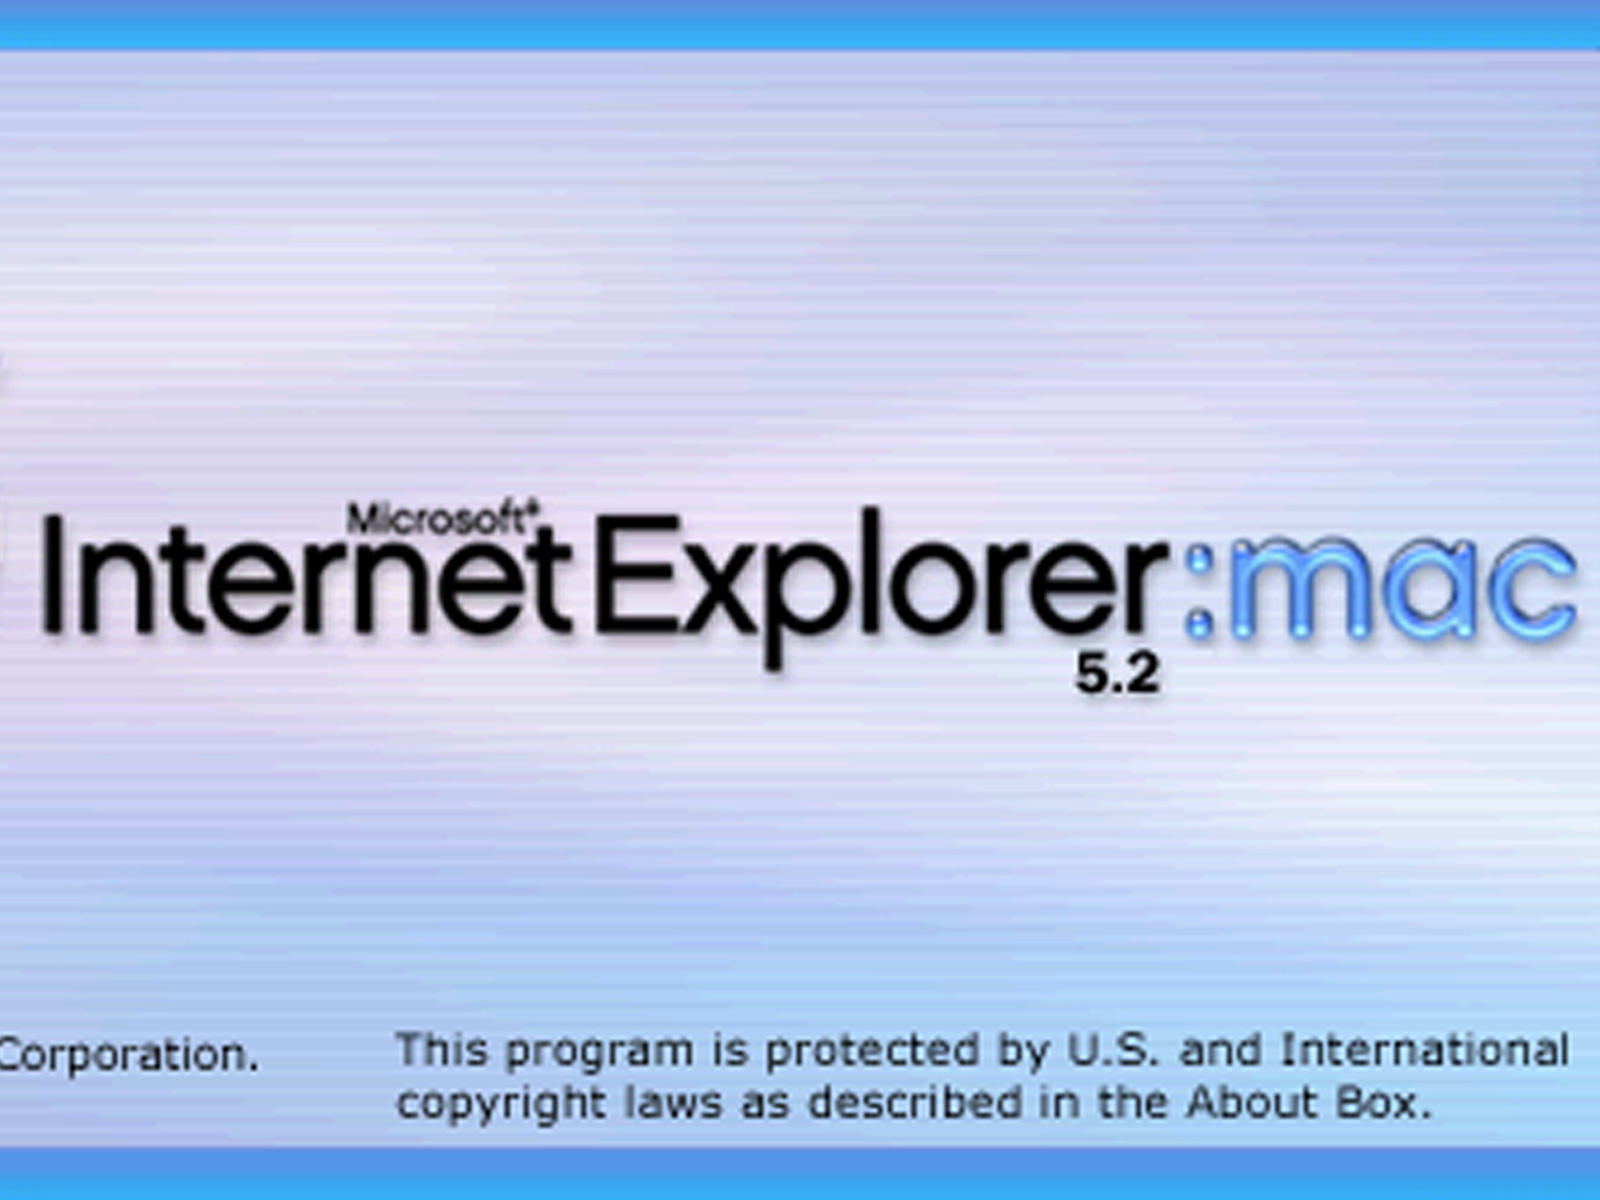 Internet Explorer For The Mac